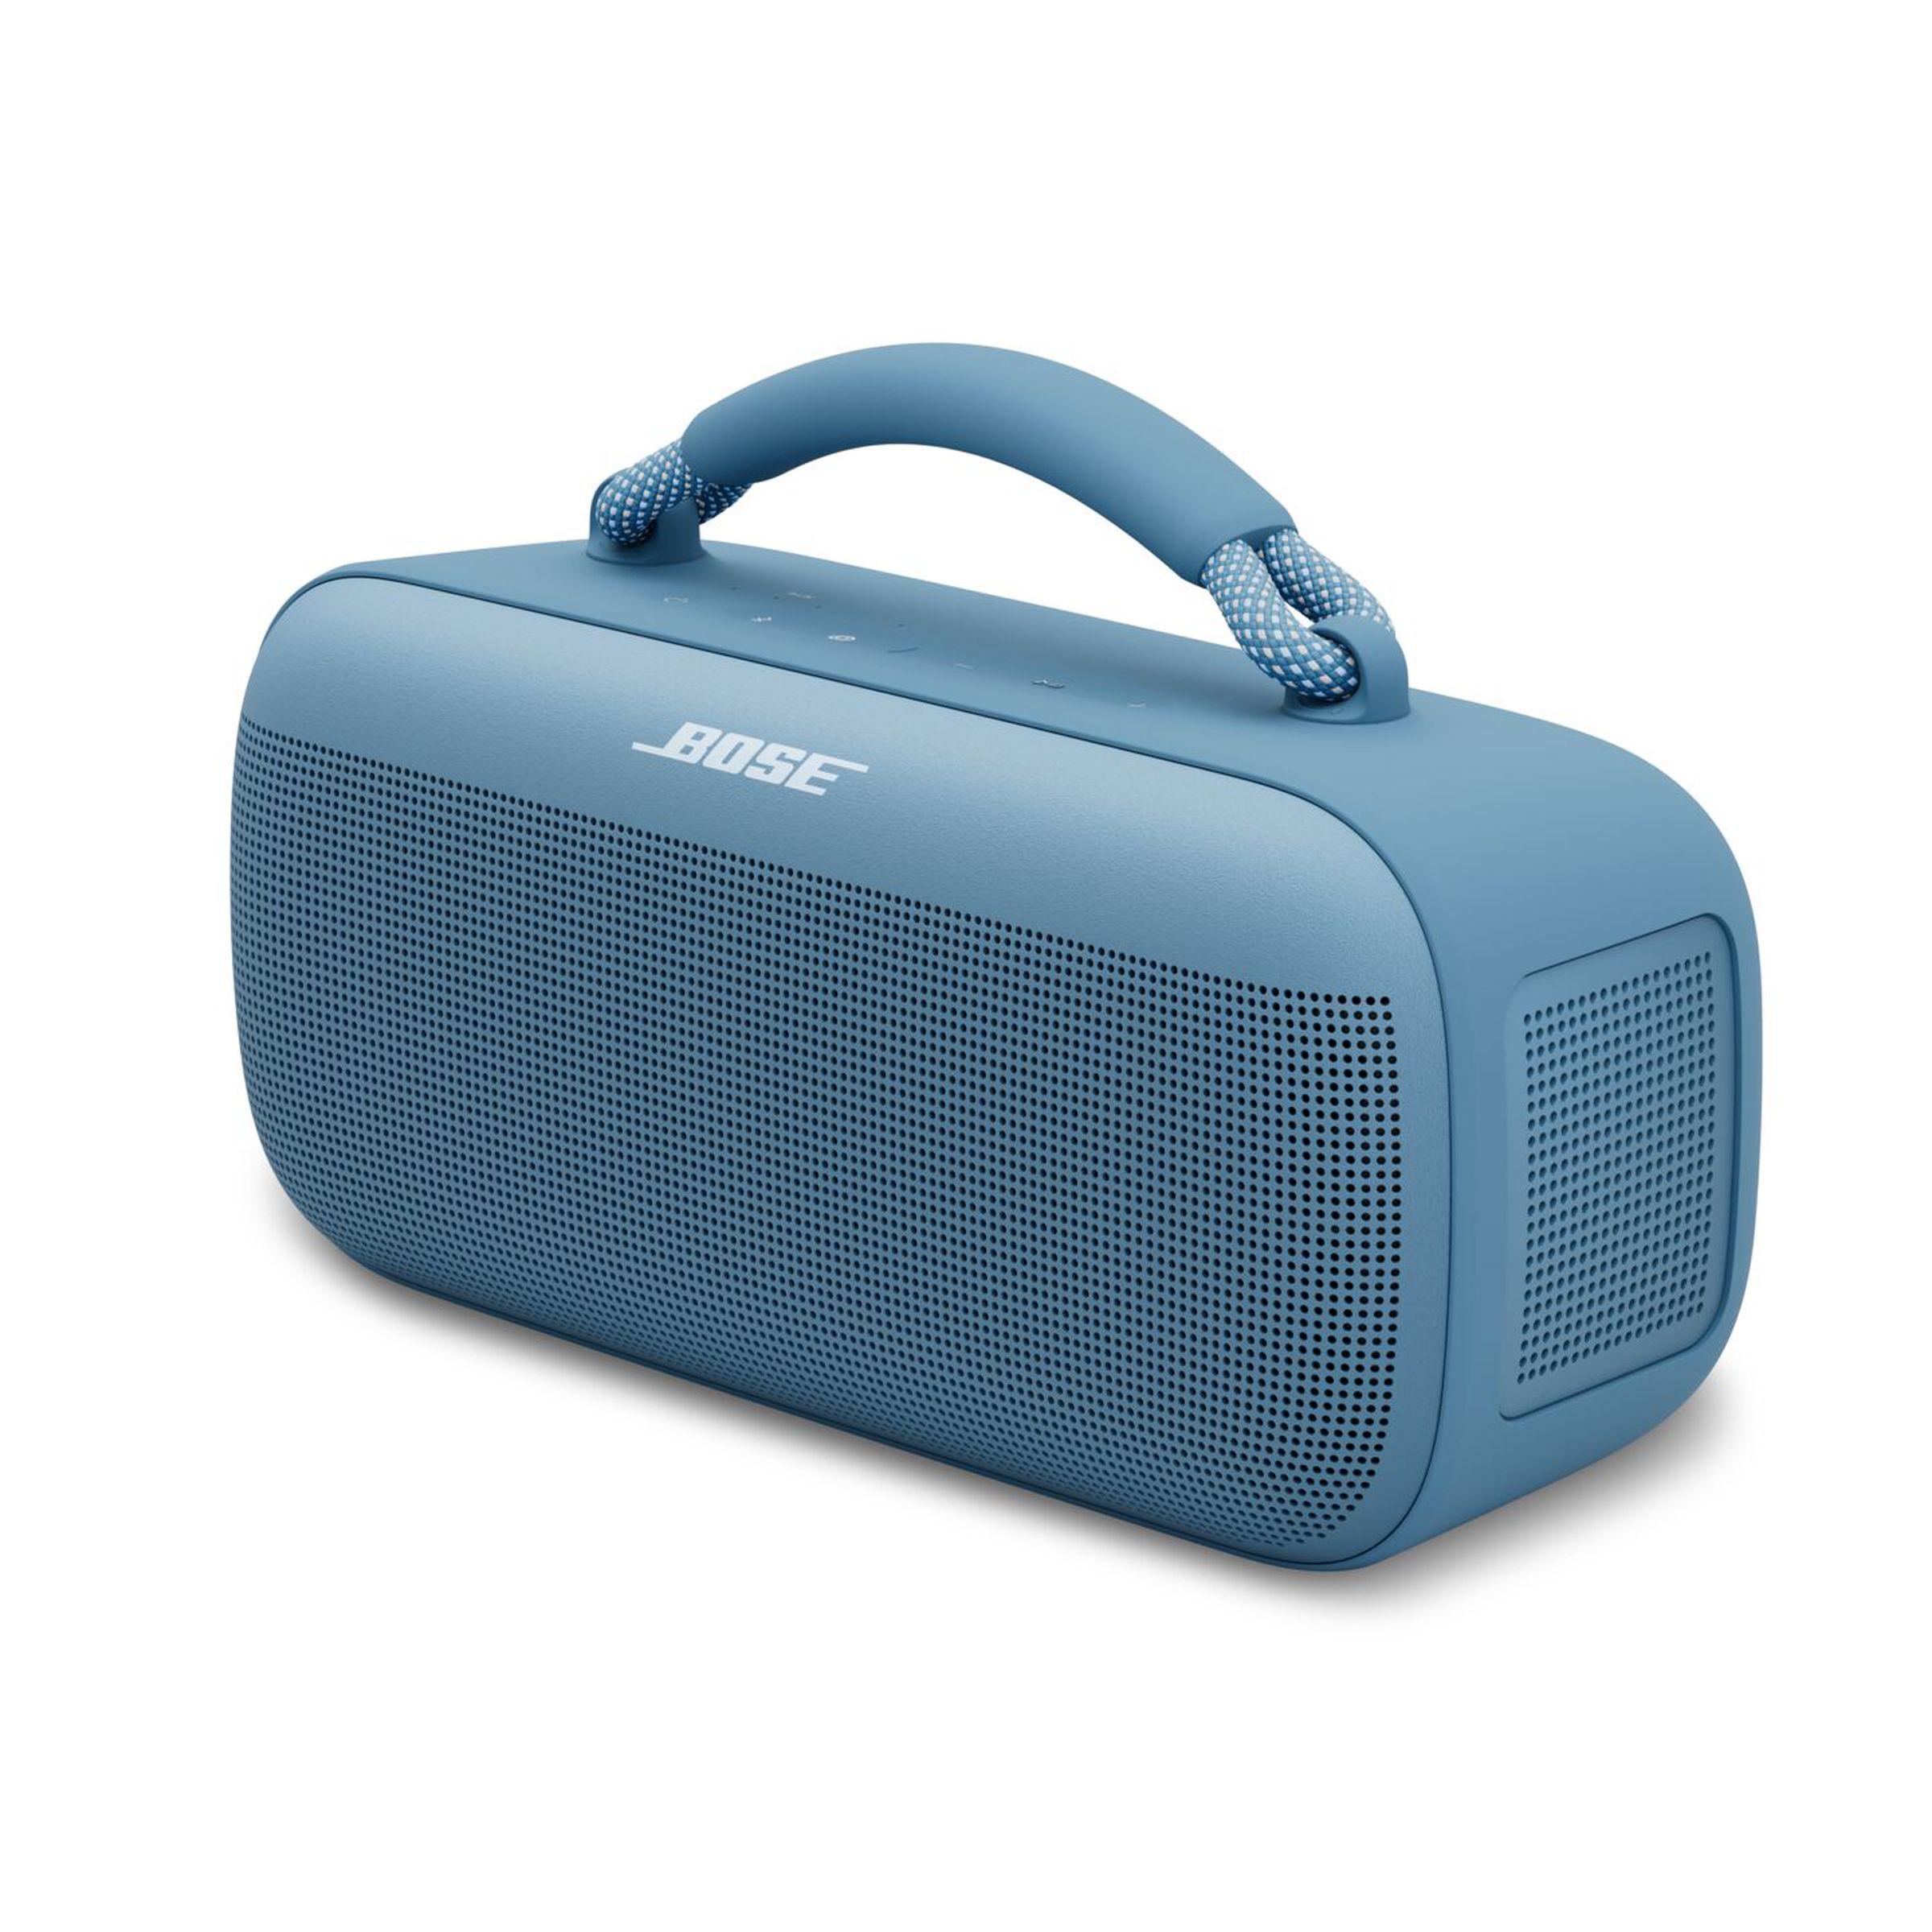 A marketing image of Bose’s SoundLink Max portable speaker.